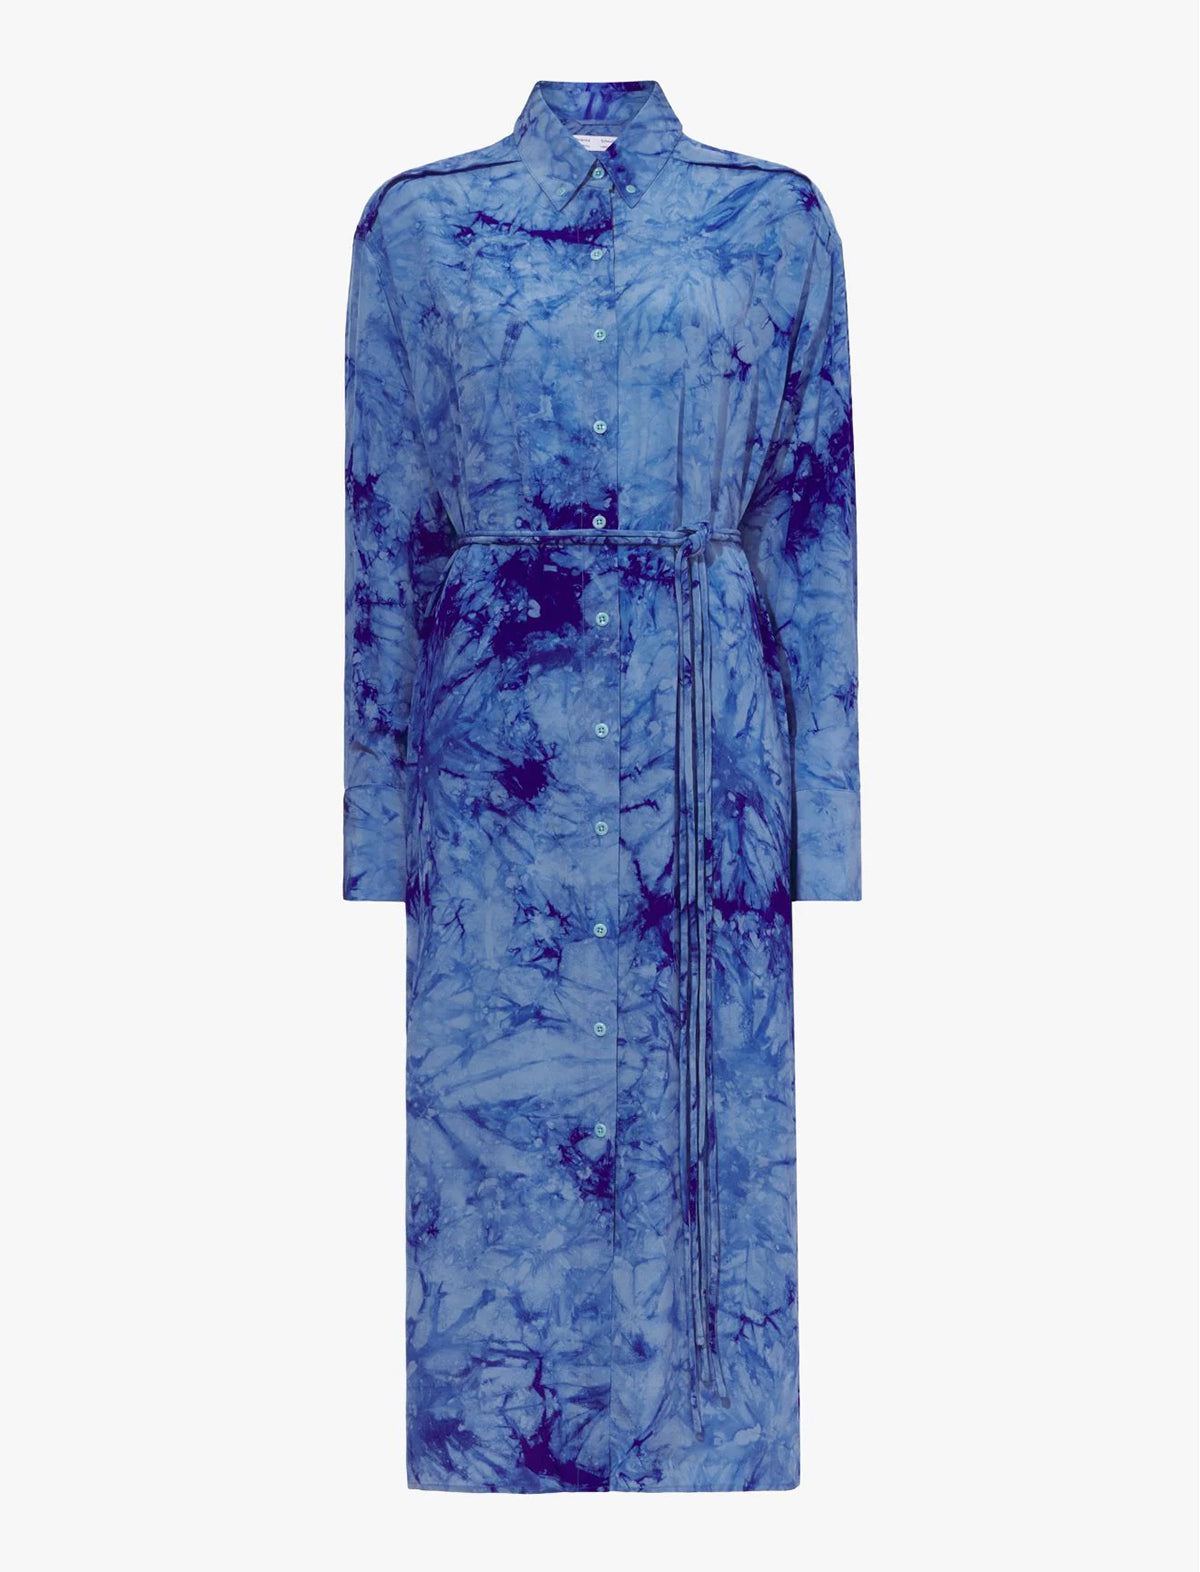 PROENZA SCHOULER WHITE LABEL Tie Dye Silk Shirt Dress in Blue